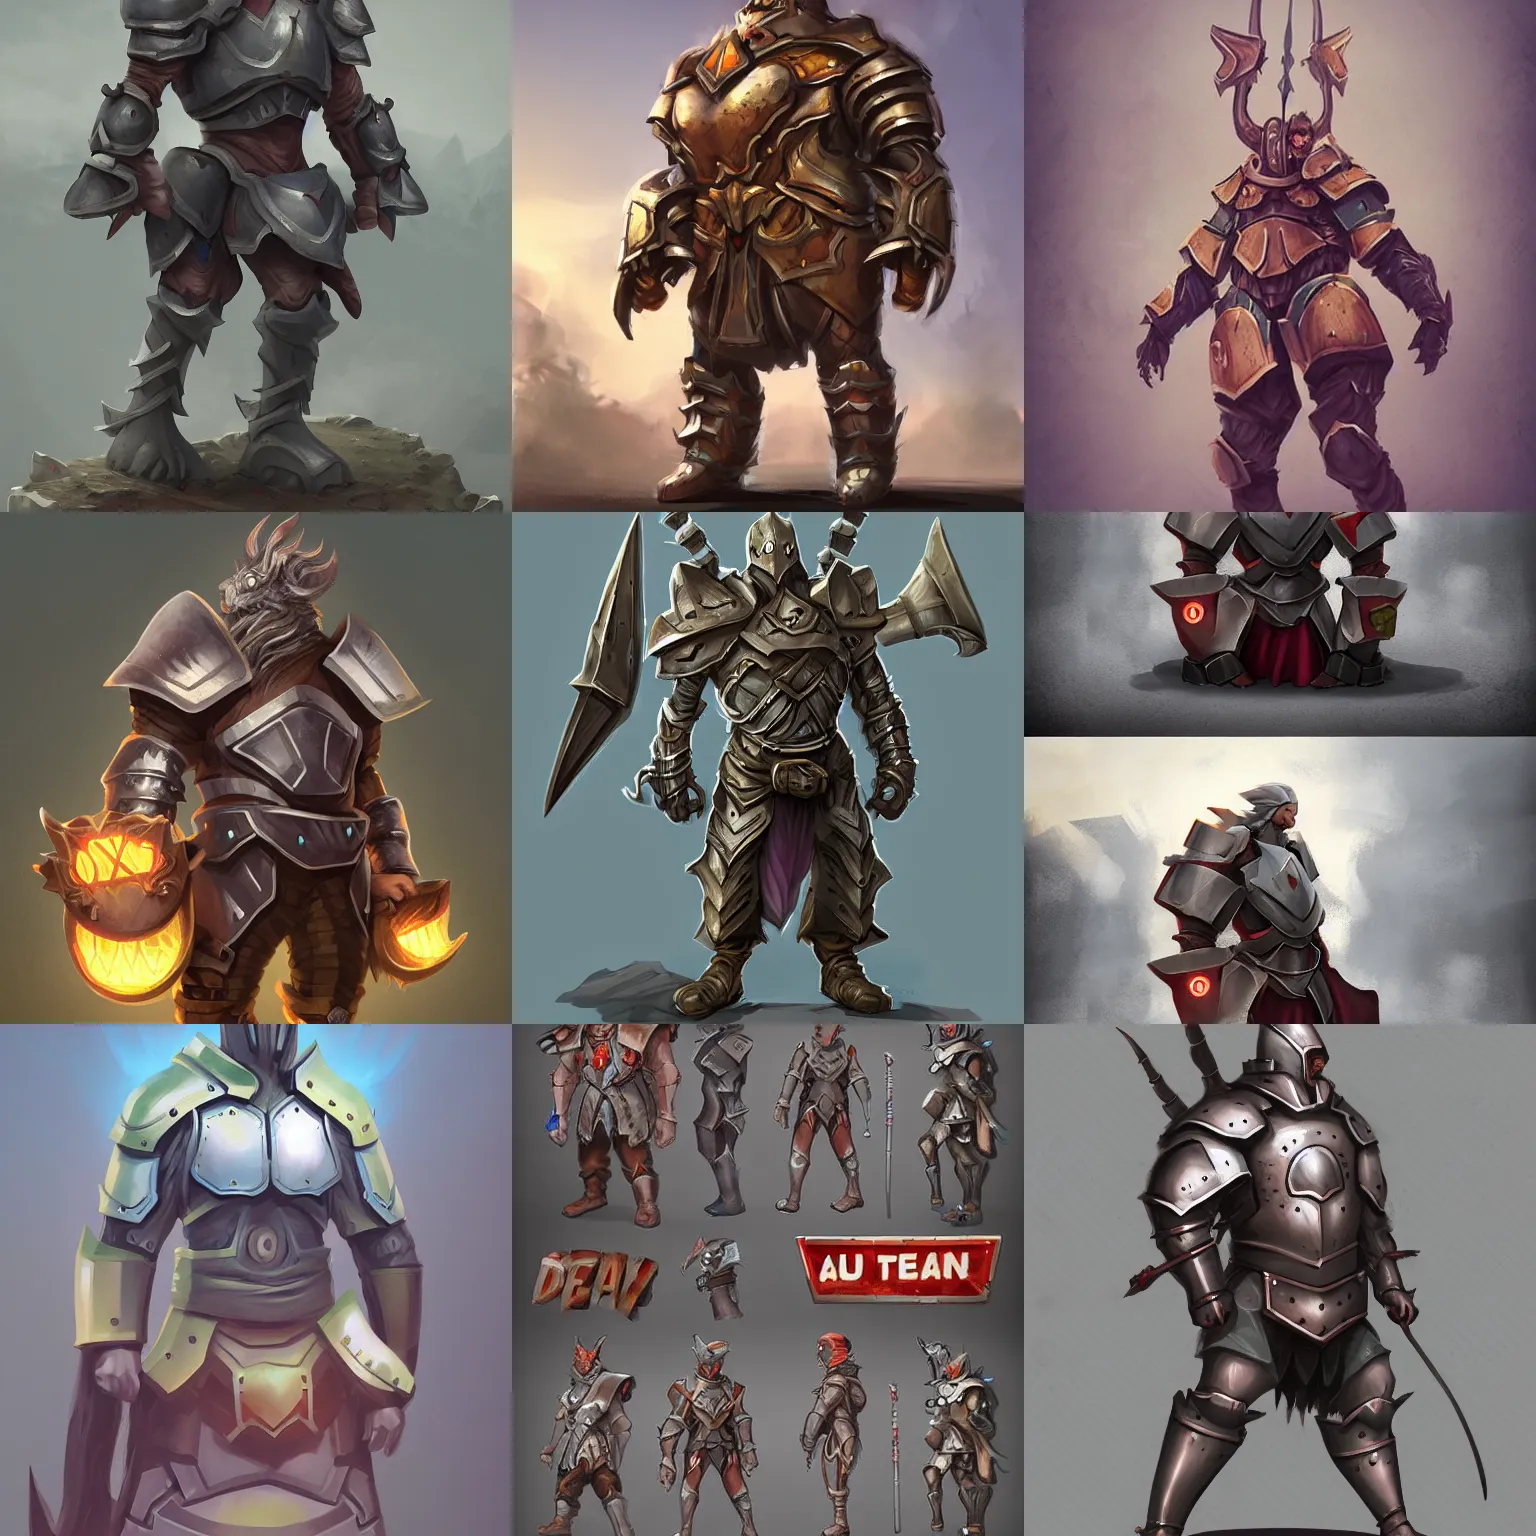 Prompt: giant road sign armor champion, d & d, character design concept art trending on artstation